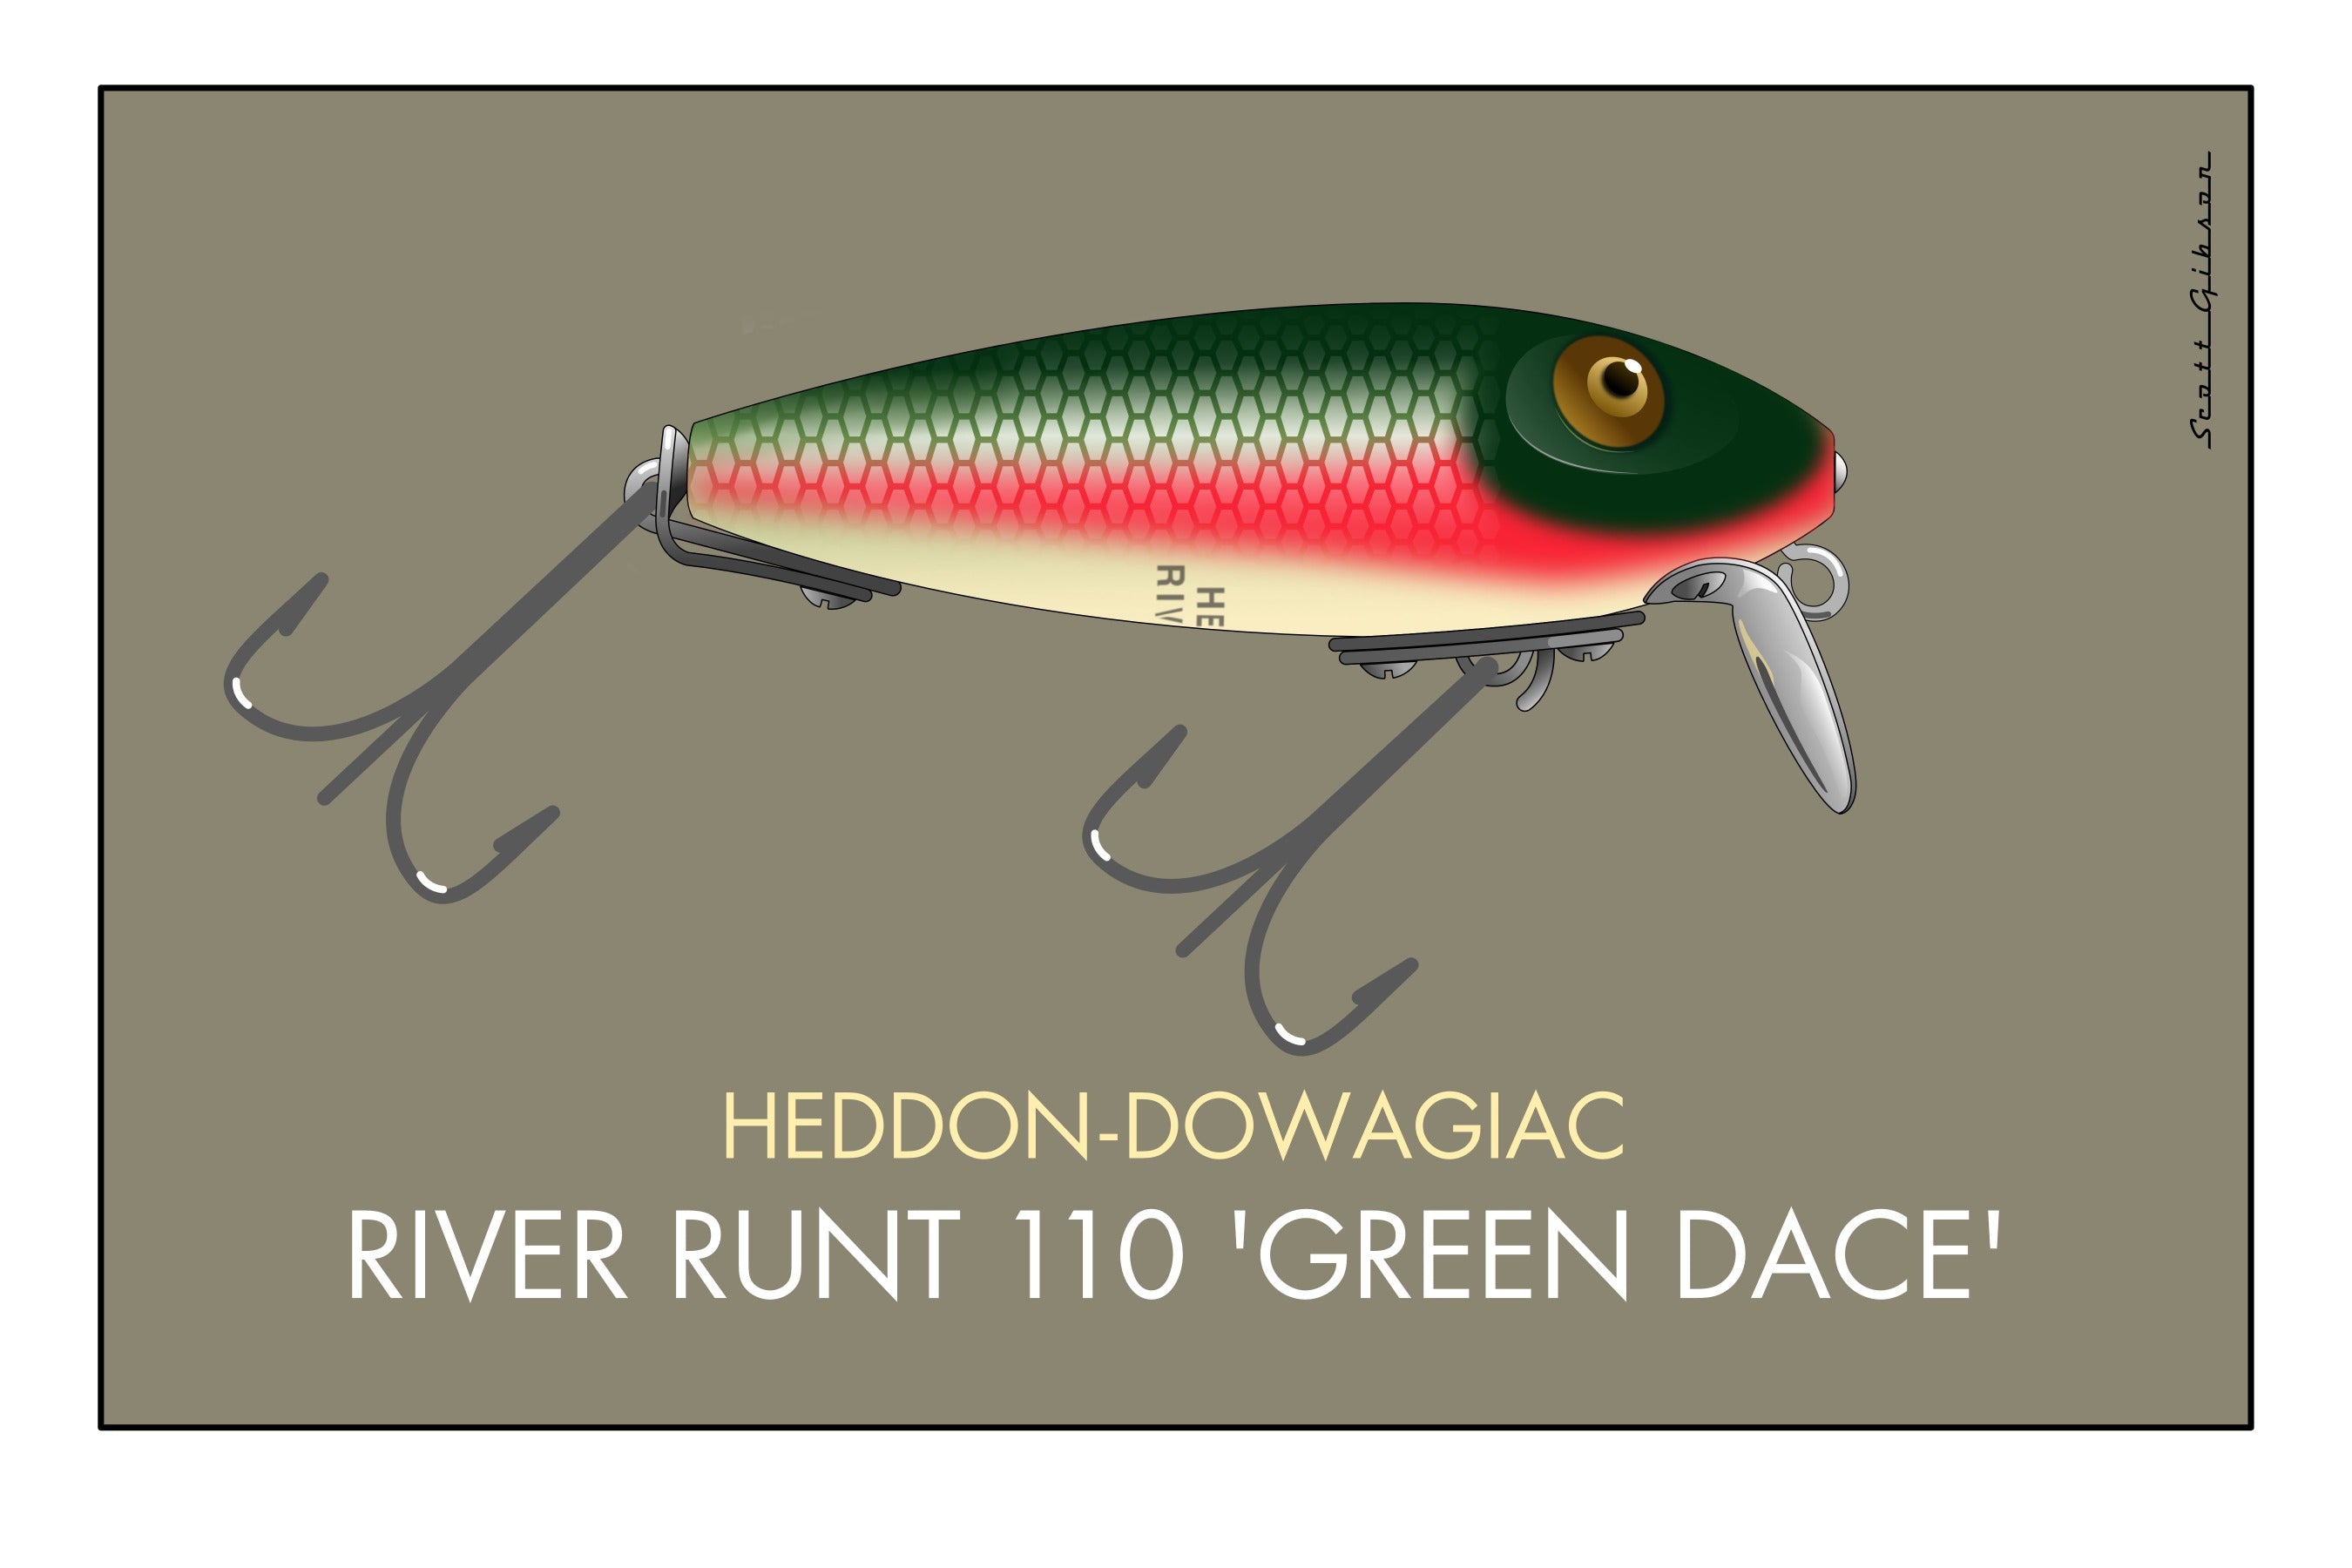 heddon river runts fishing lures